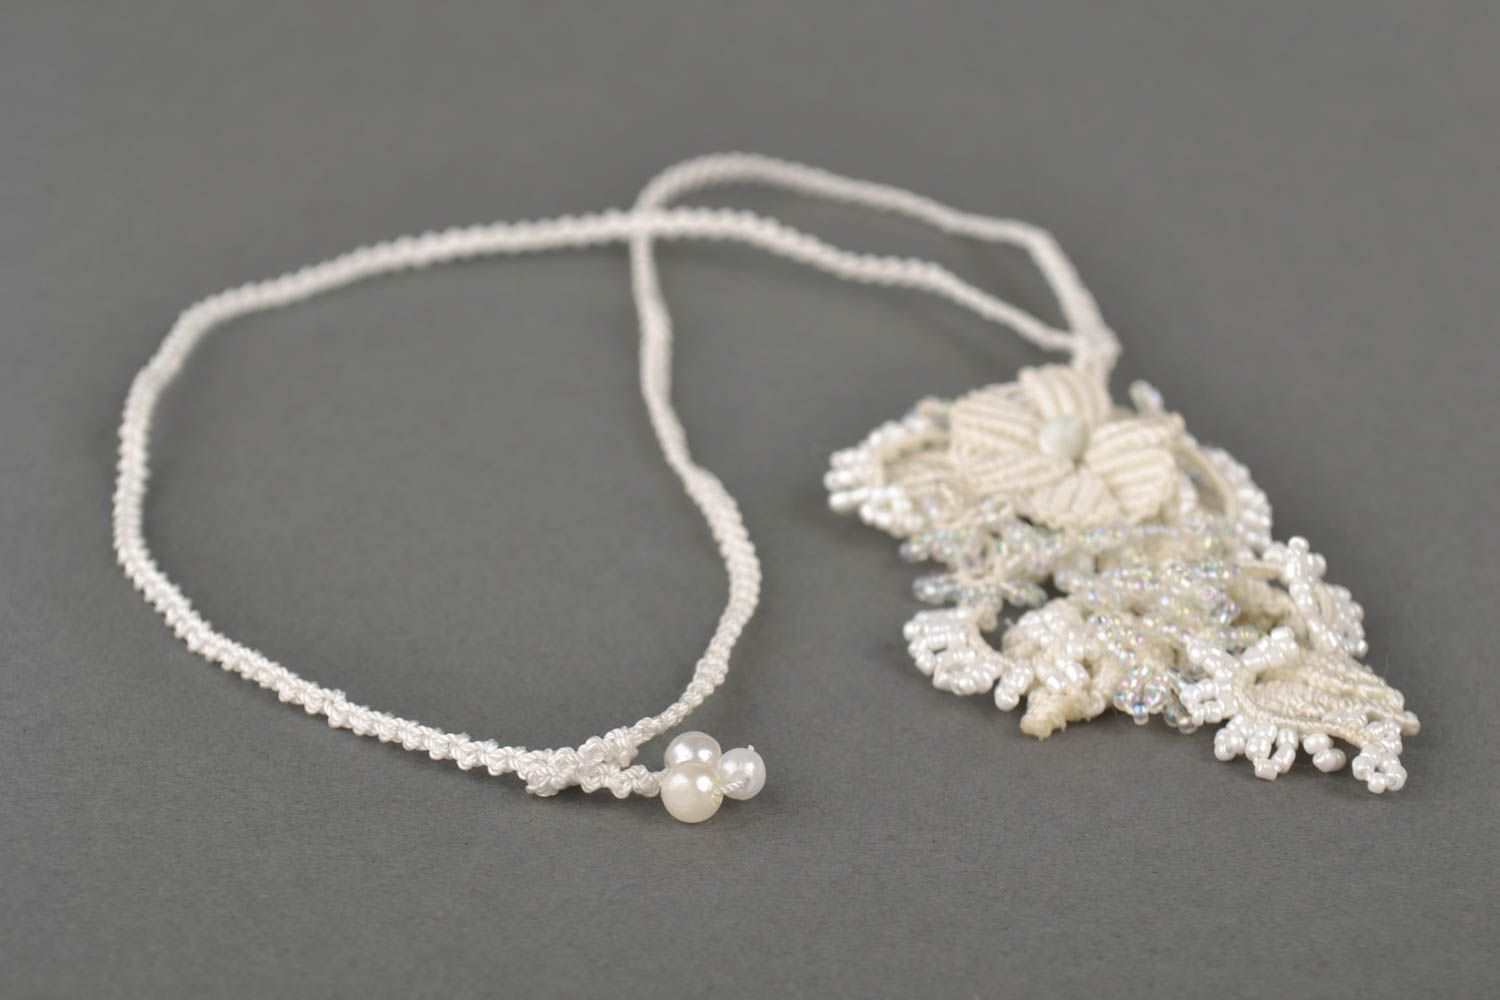 Handmade stylish beautiful pendant elegant accessory woven flower pendant photo 4